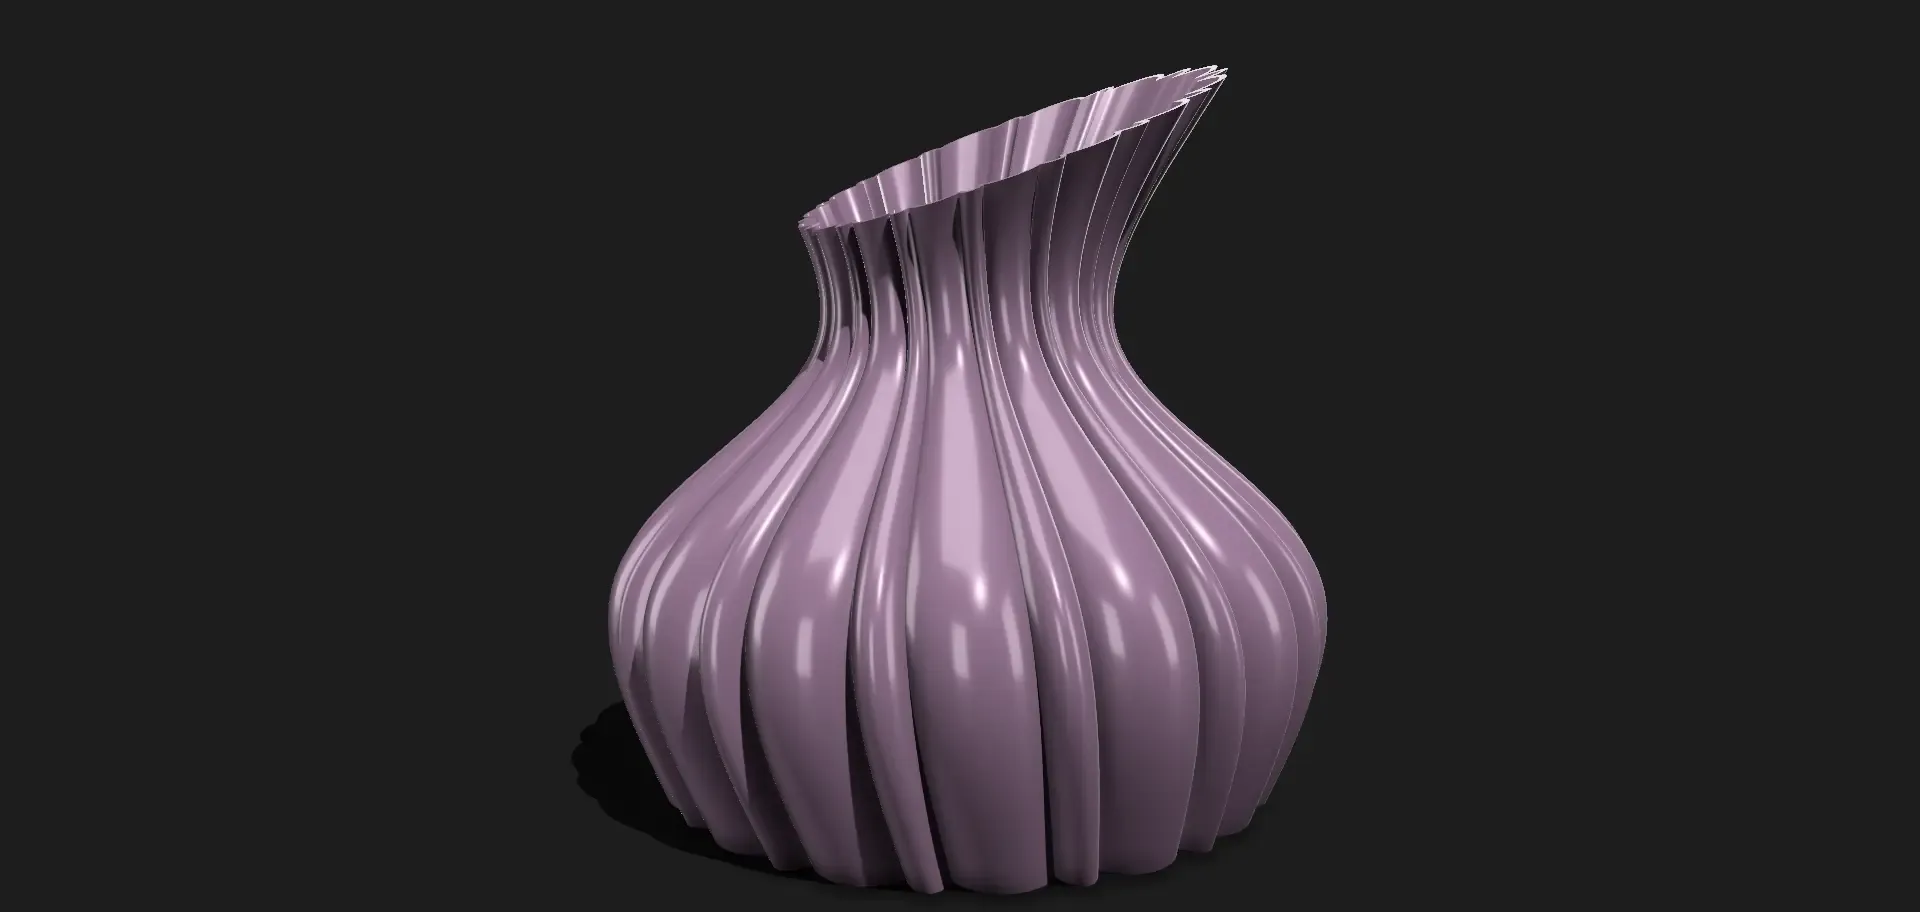 Vase#4 (jellyfishflower)